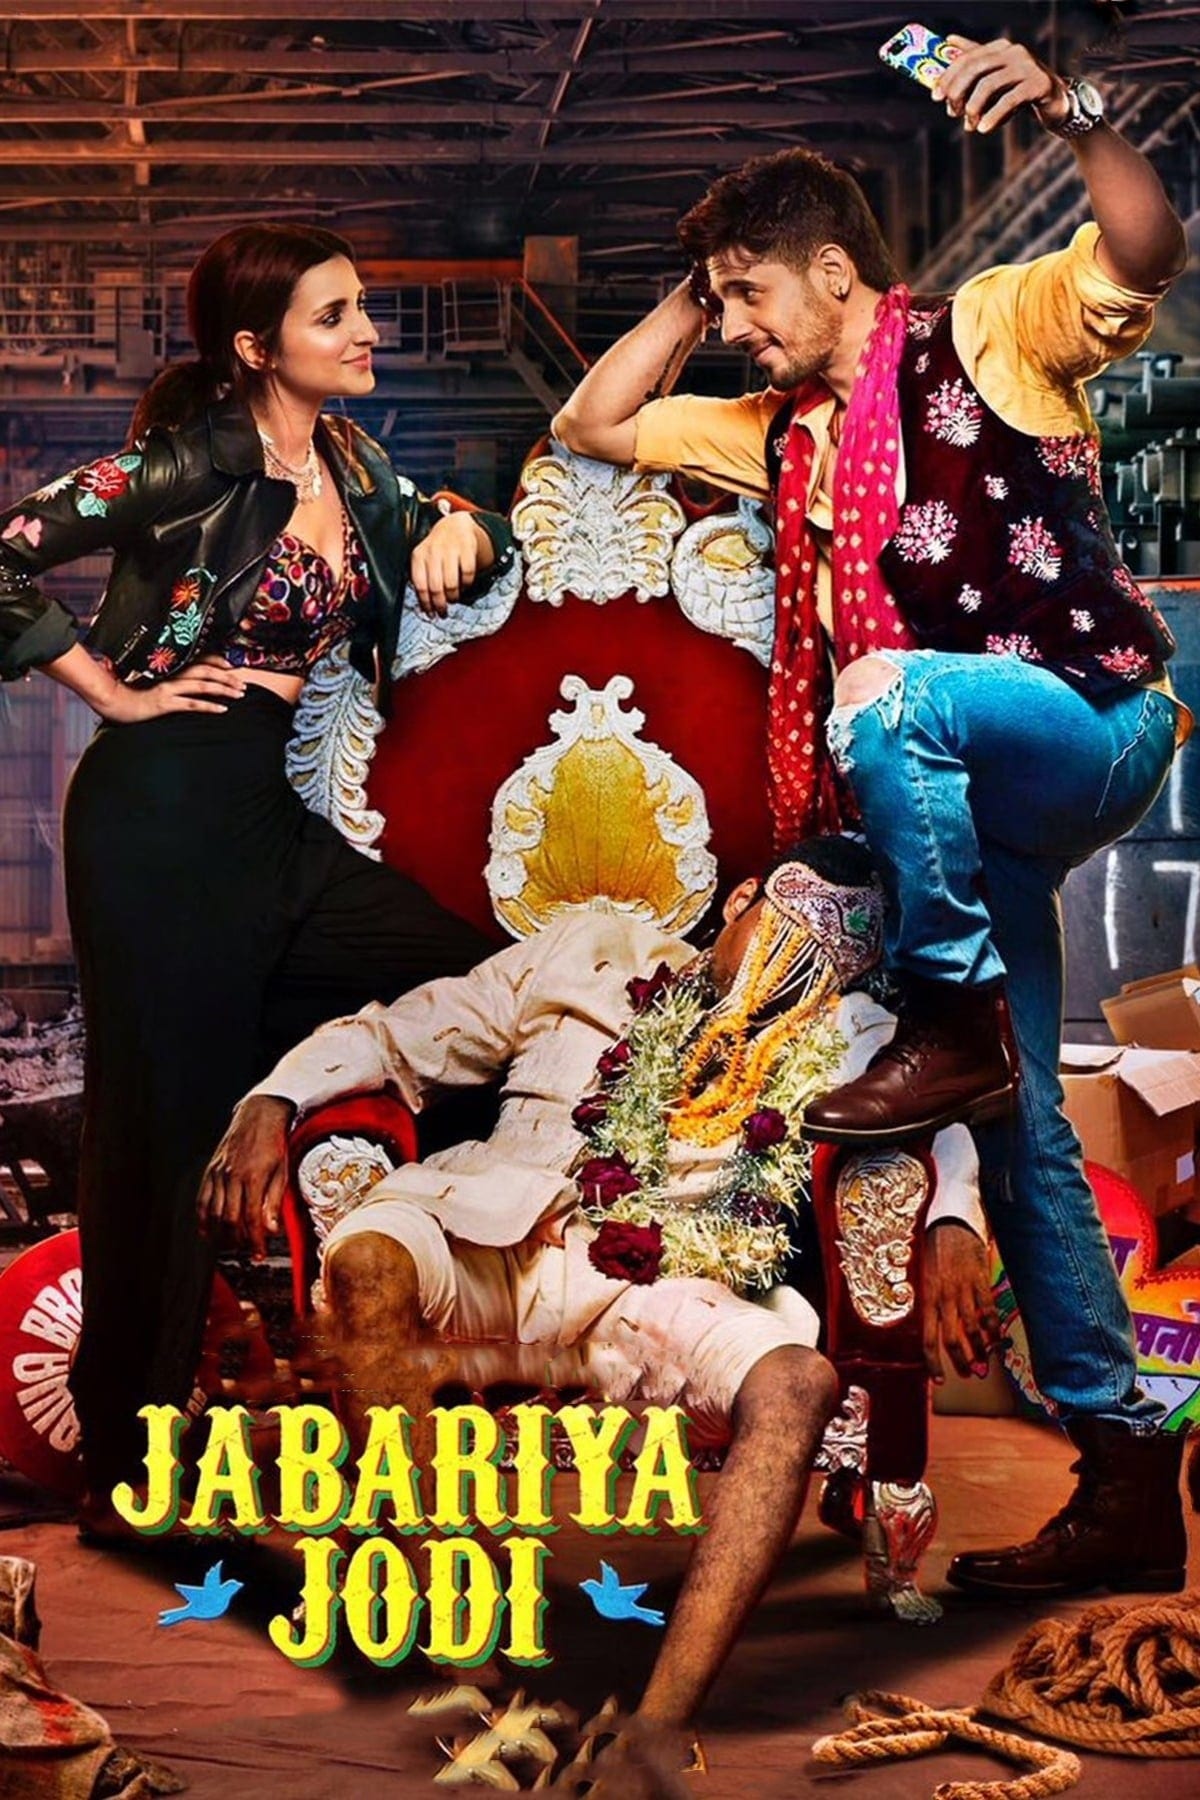 Poster for the movie "Jabariya Jodi"